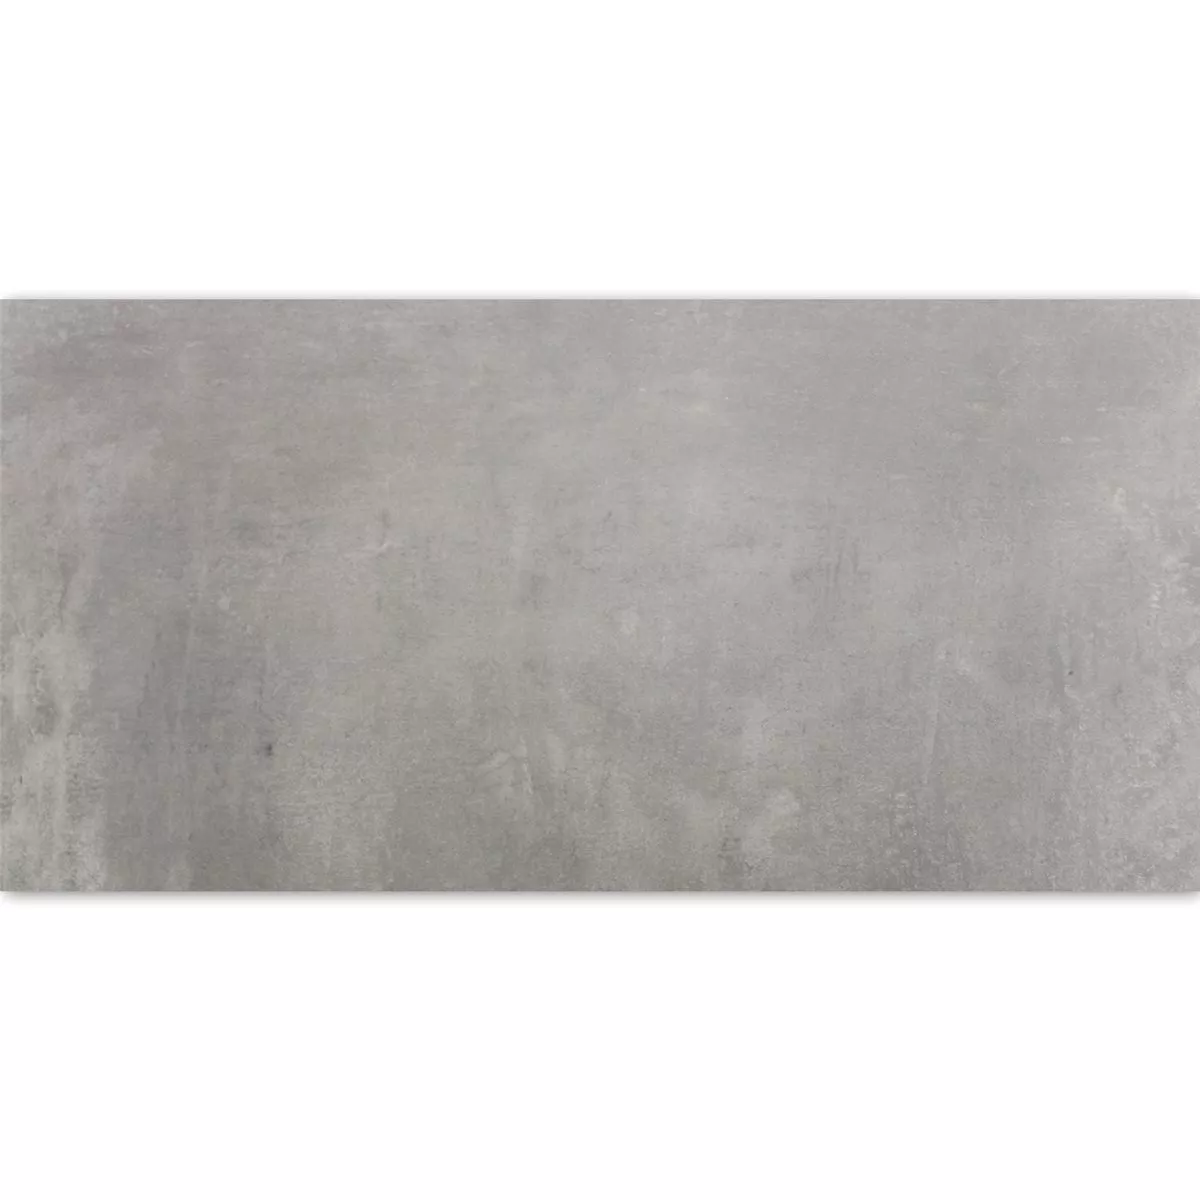 Bodenfliesen Etna Hellgrau Glasiert 30x60cm